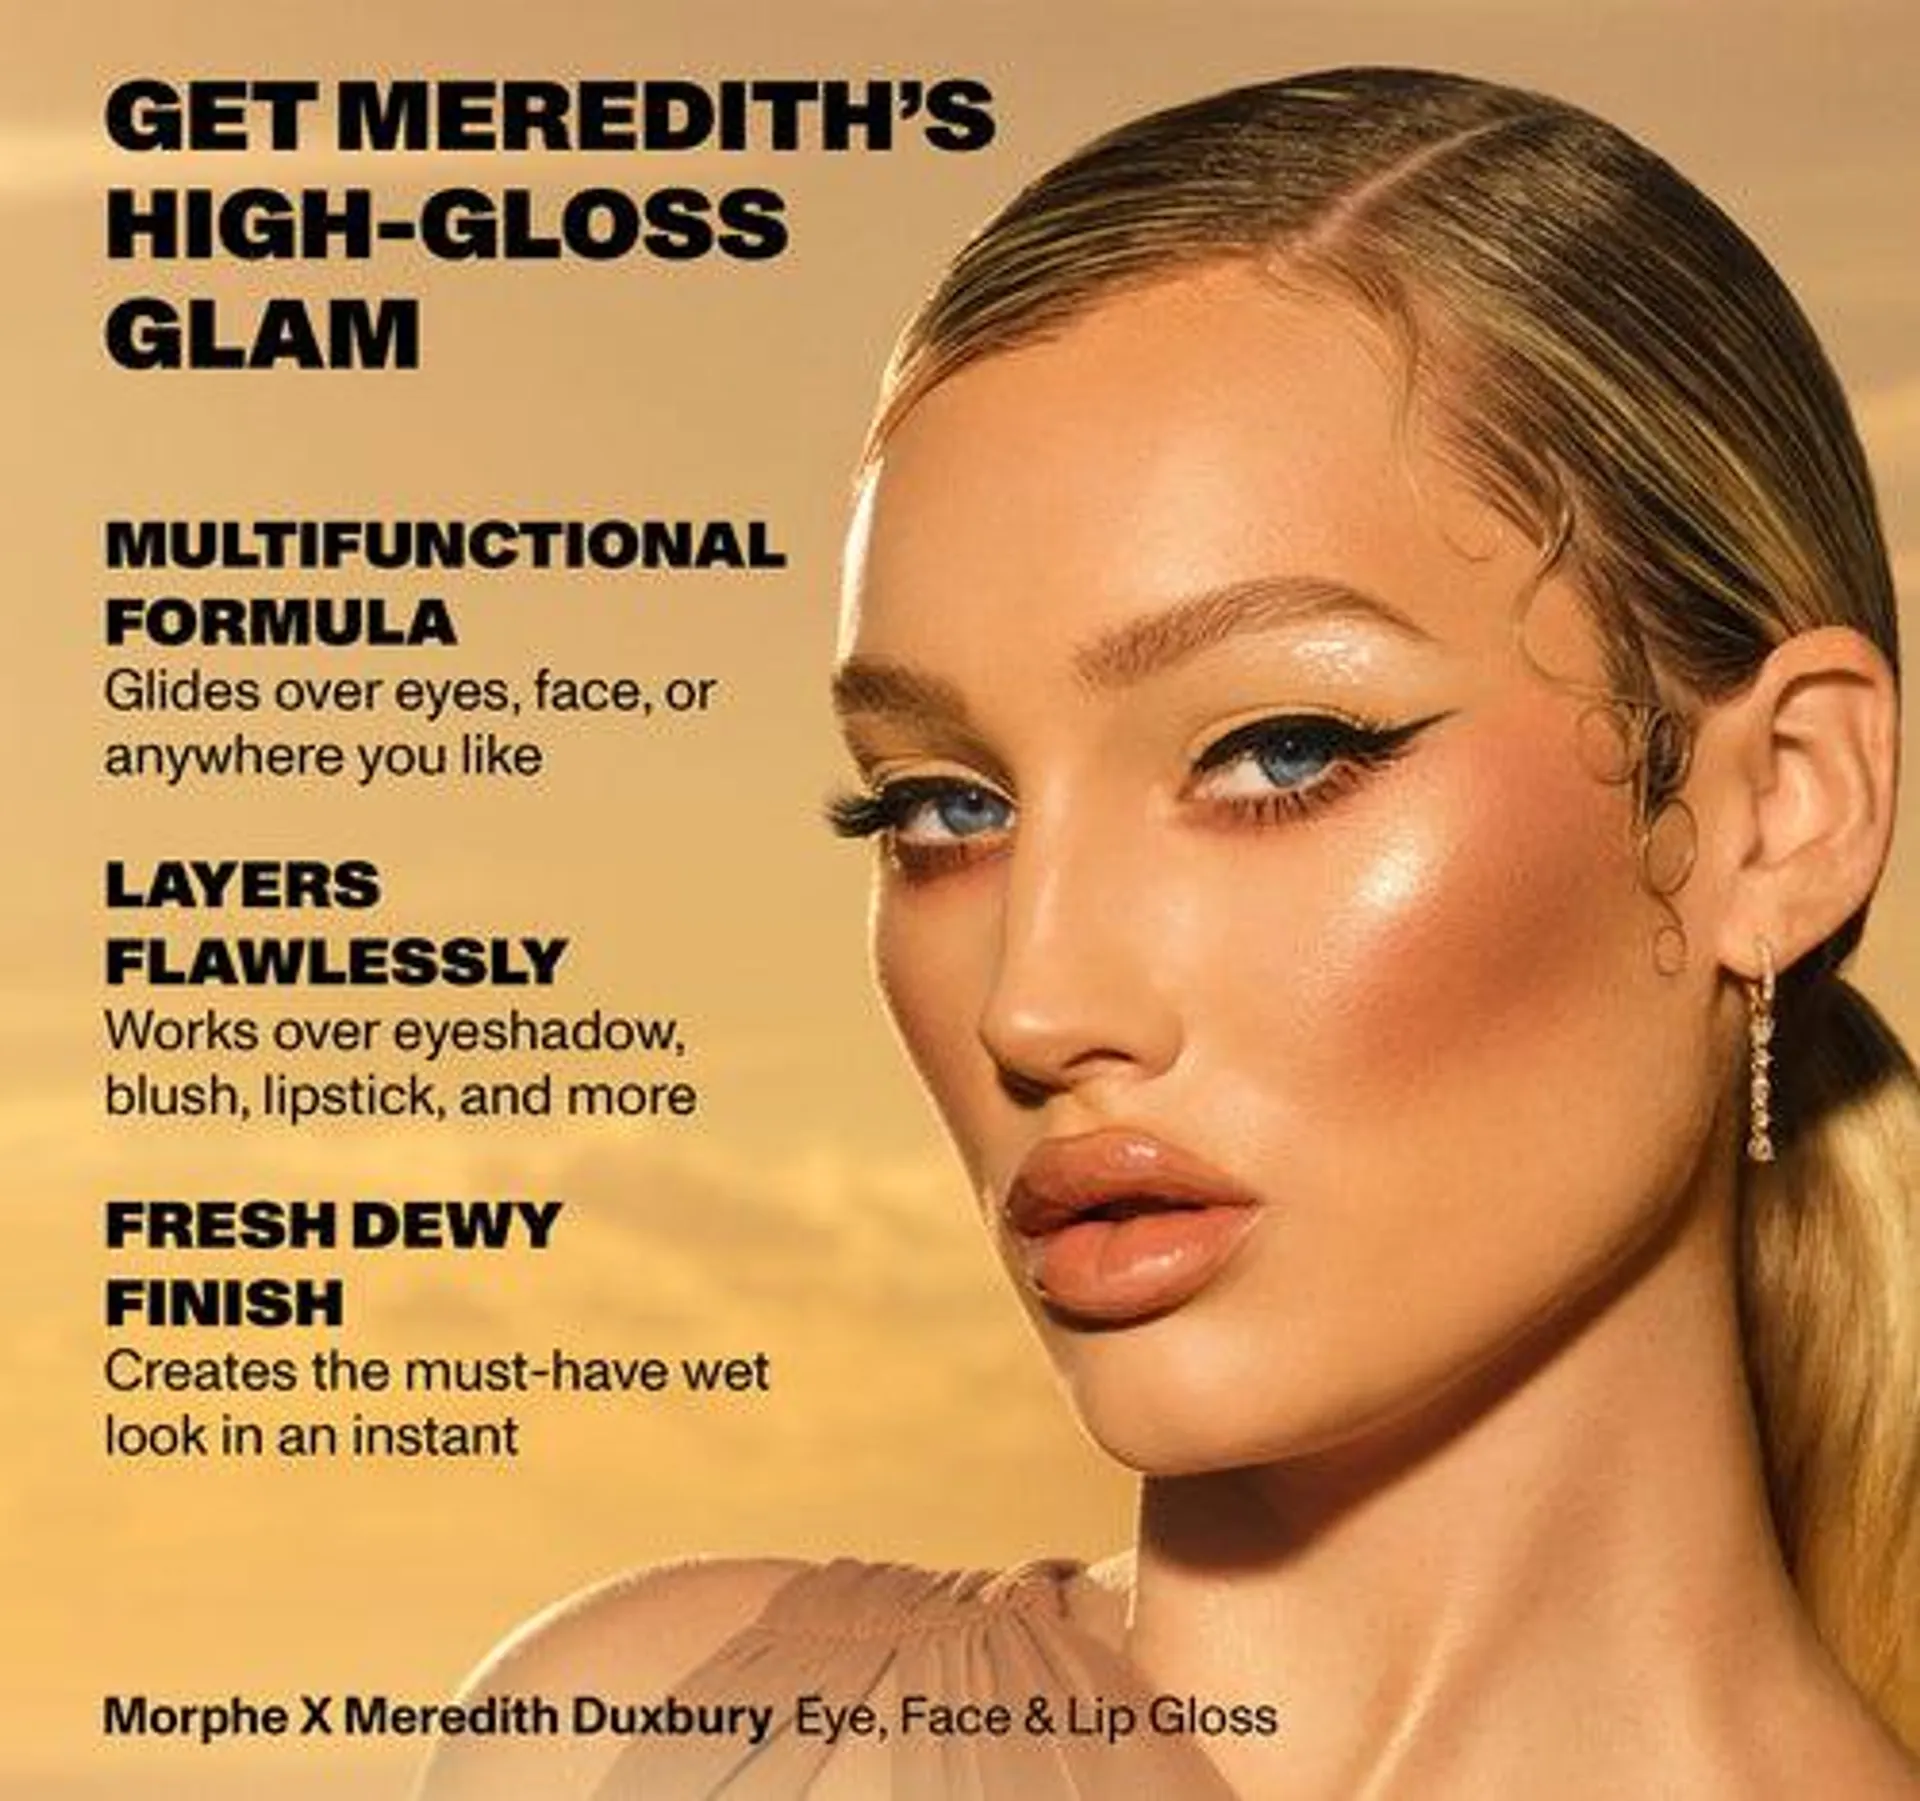 Morphe X Meredith Duxbury Eye, Face & Lip Gloss